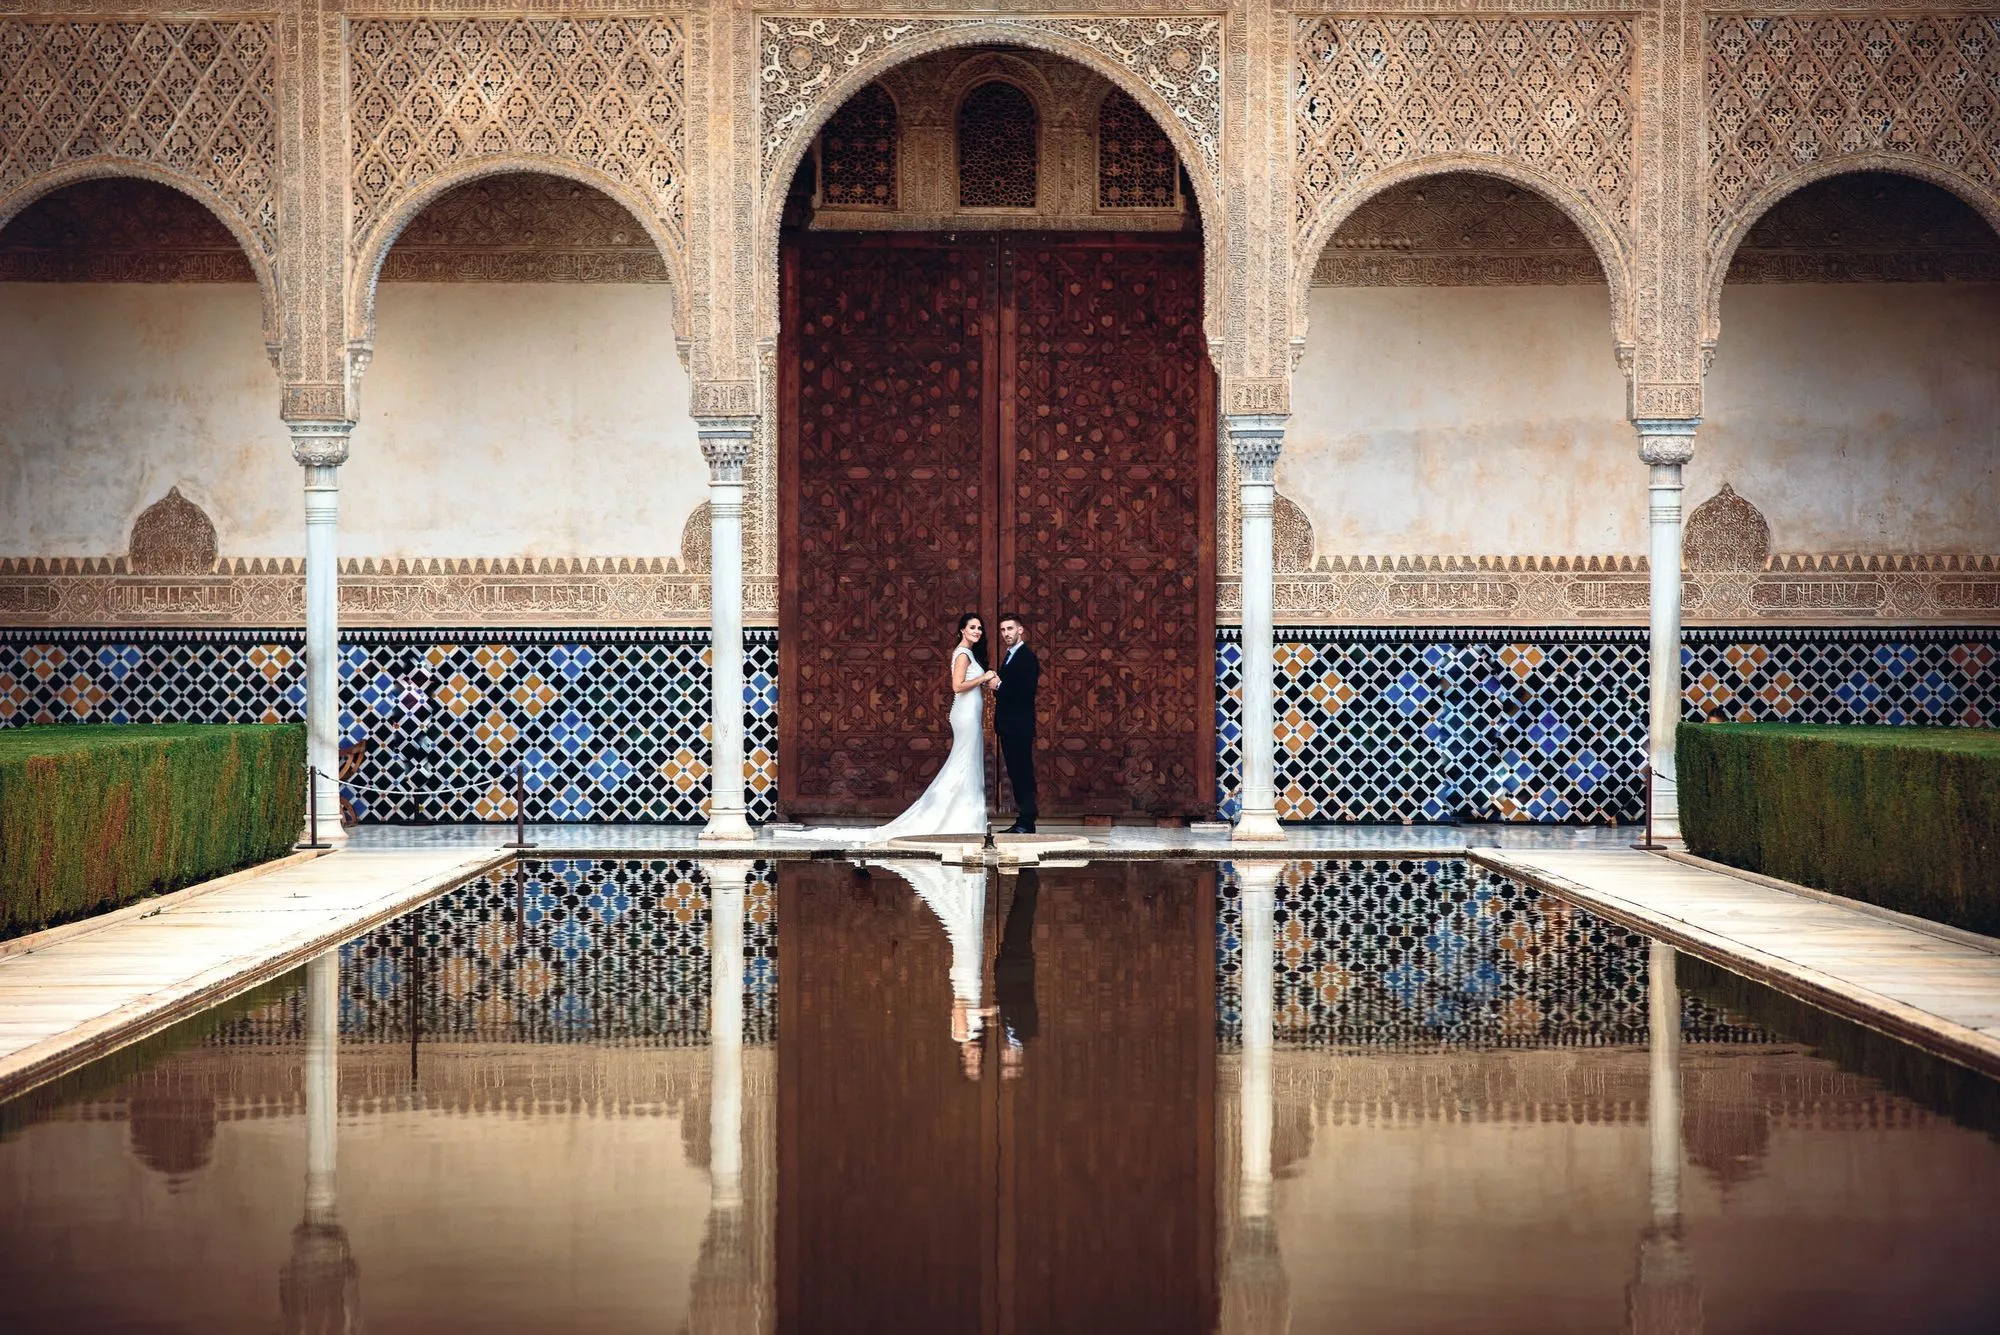 Foto de boda en la Alhambra, Granada, 2018.